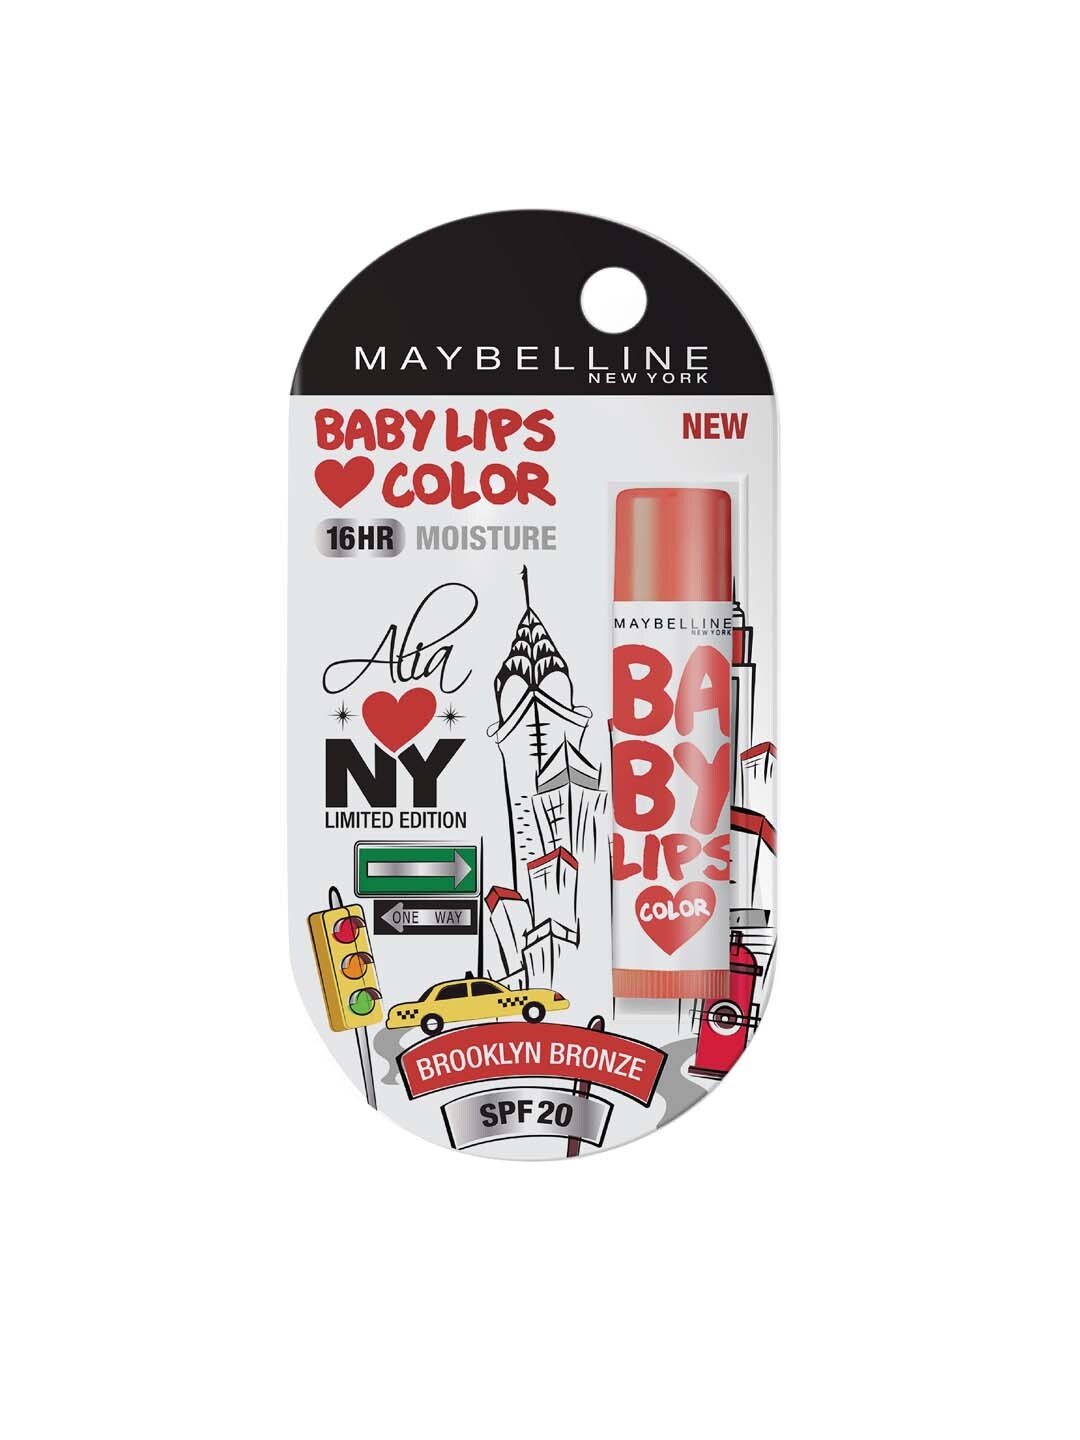 Maybelline New York Alia Loves New York Baby Lips SPF 20 - Brooklyn Bronze 4g Price in India